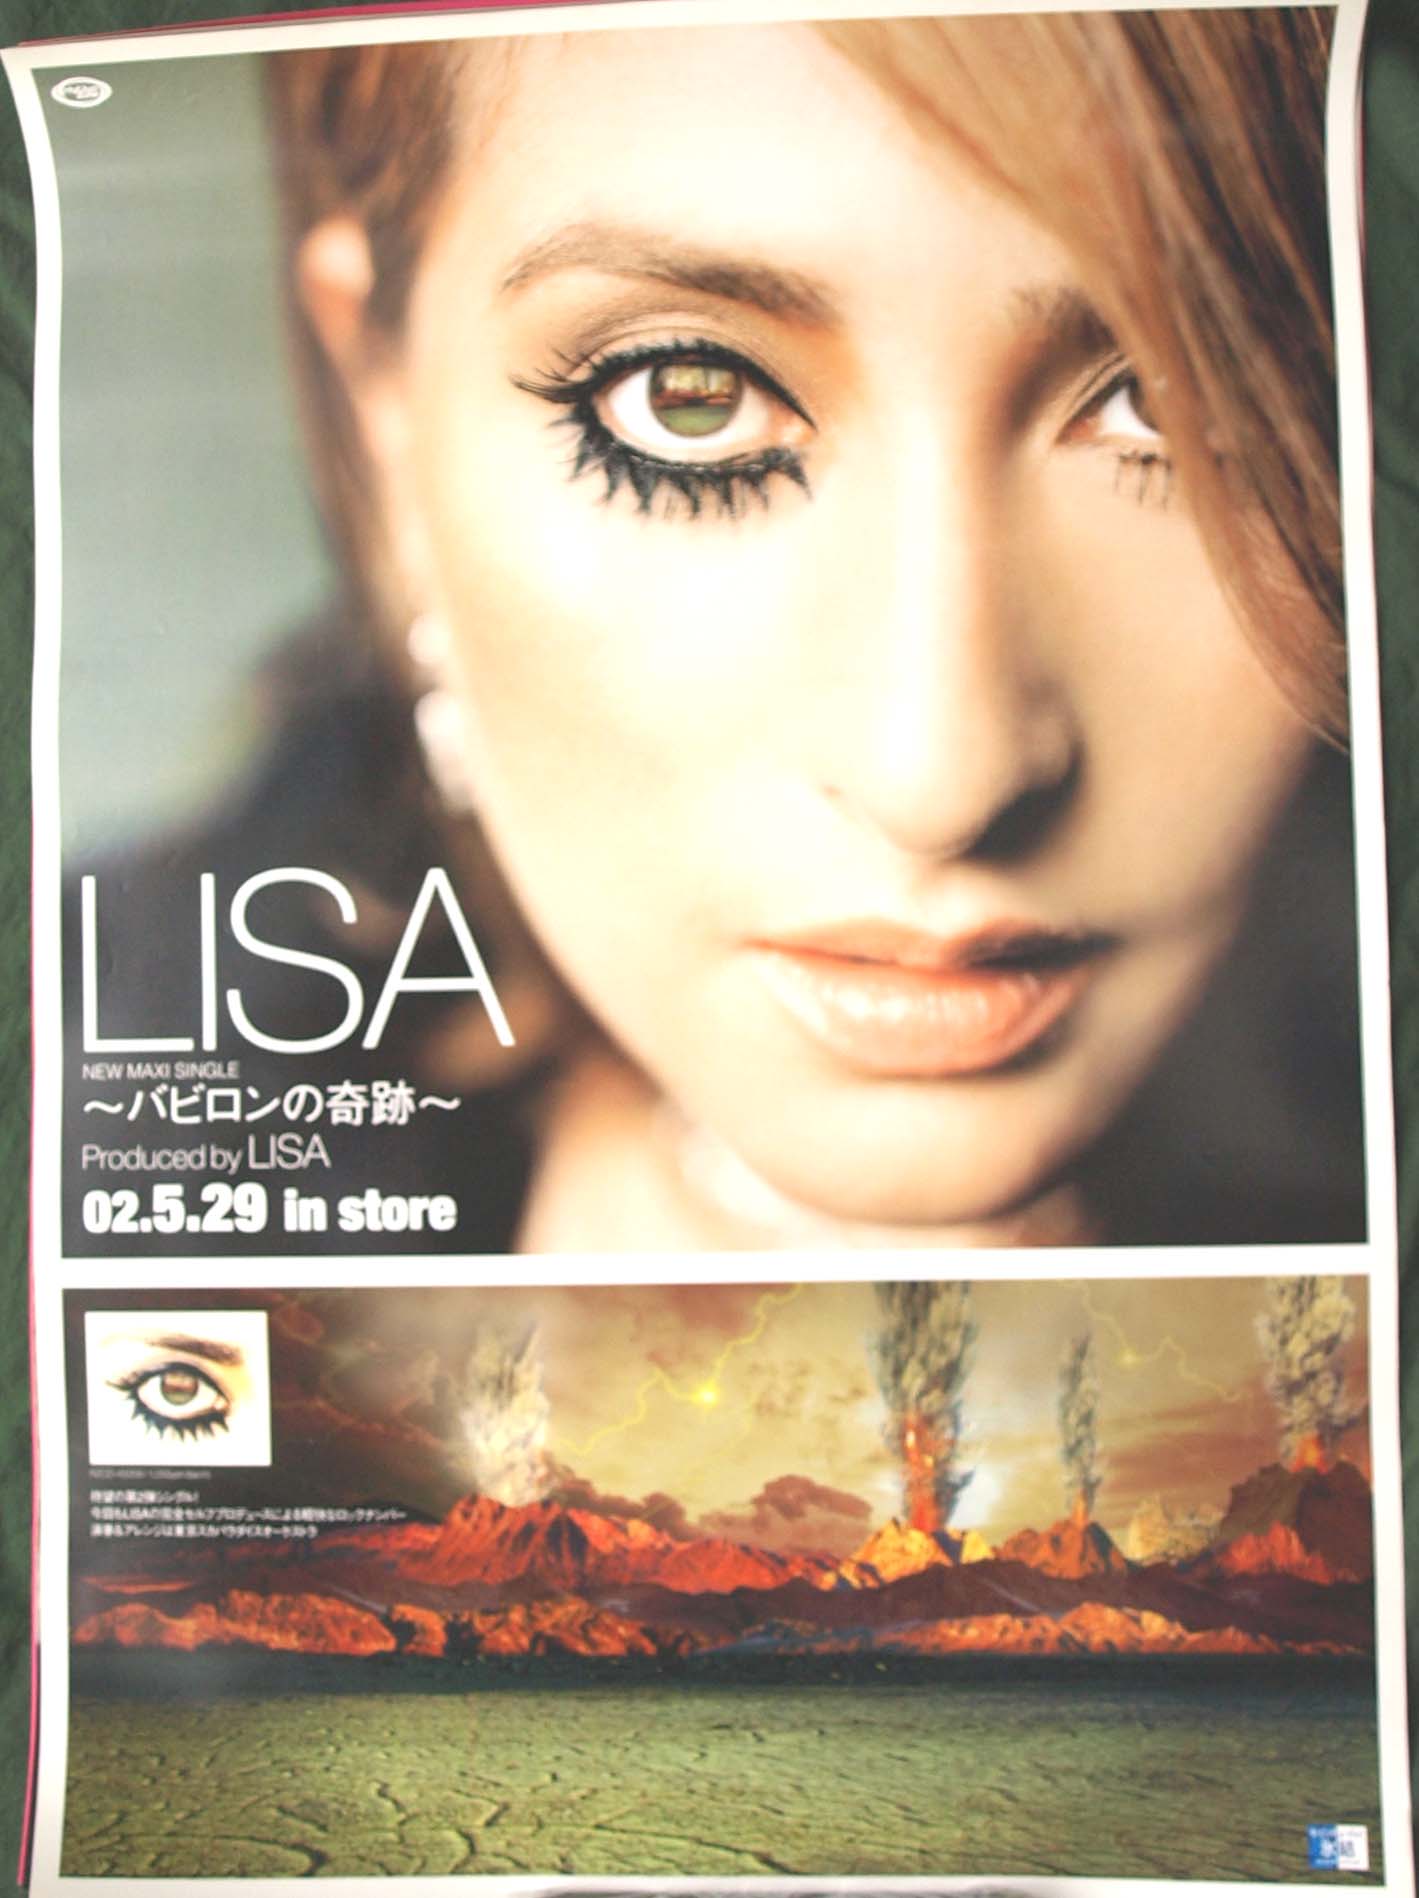 LISA 「バビロンの奇跡」のポスター